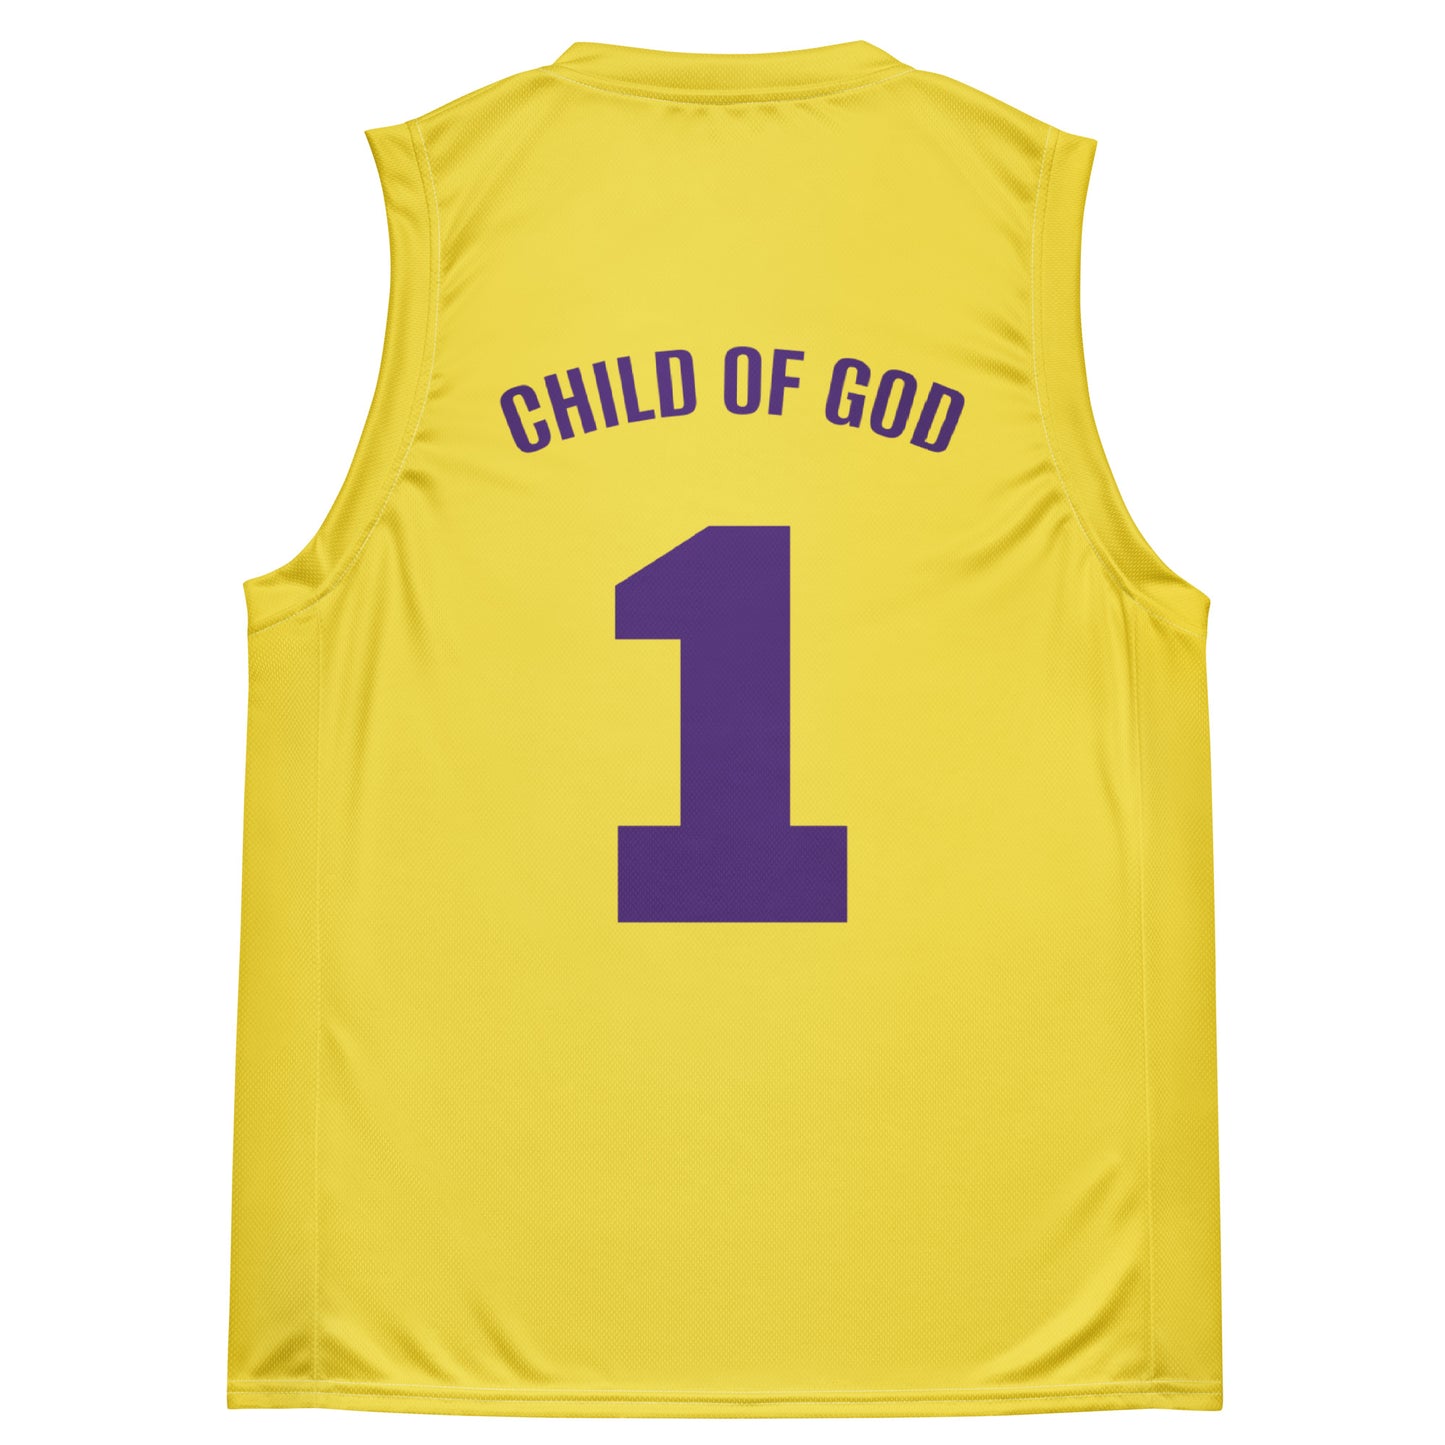 #1 Child of God Yellow and purple basketball jersey